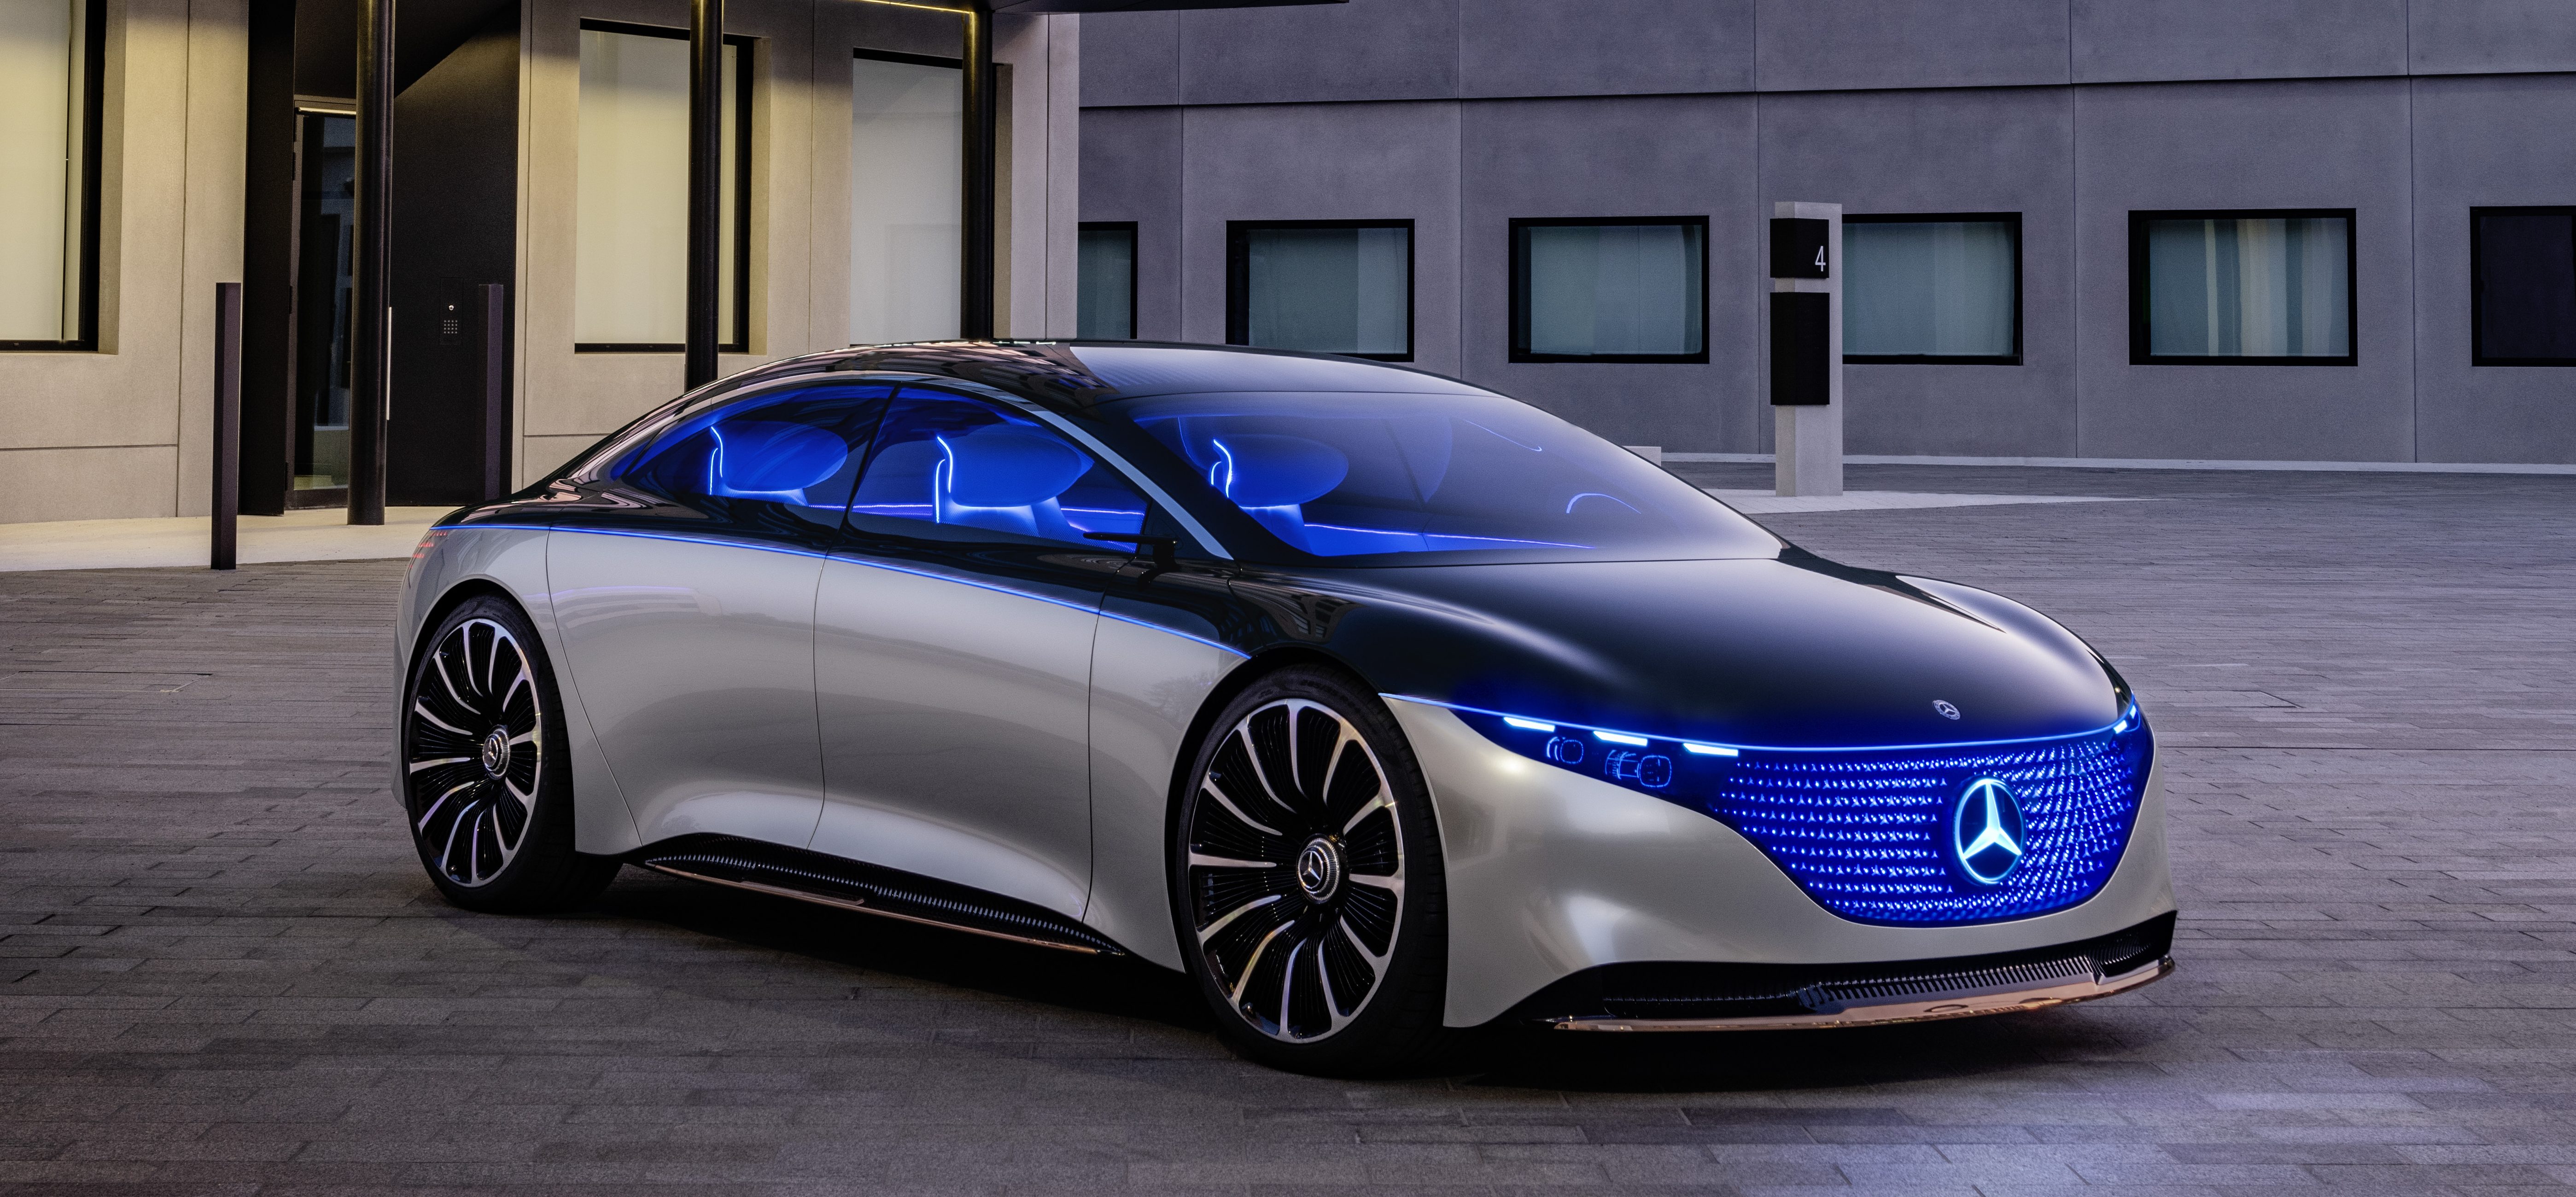 Mercedes Benz Unveils Eqs Electric Sedan Concept With 435 Miles Of Range And 350 Kw Charging Electrek